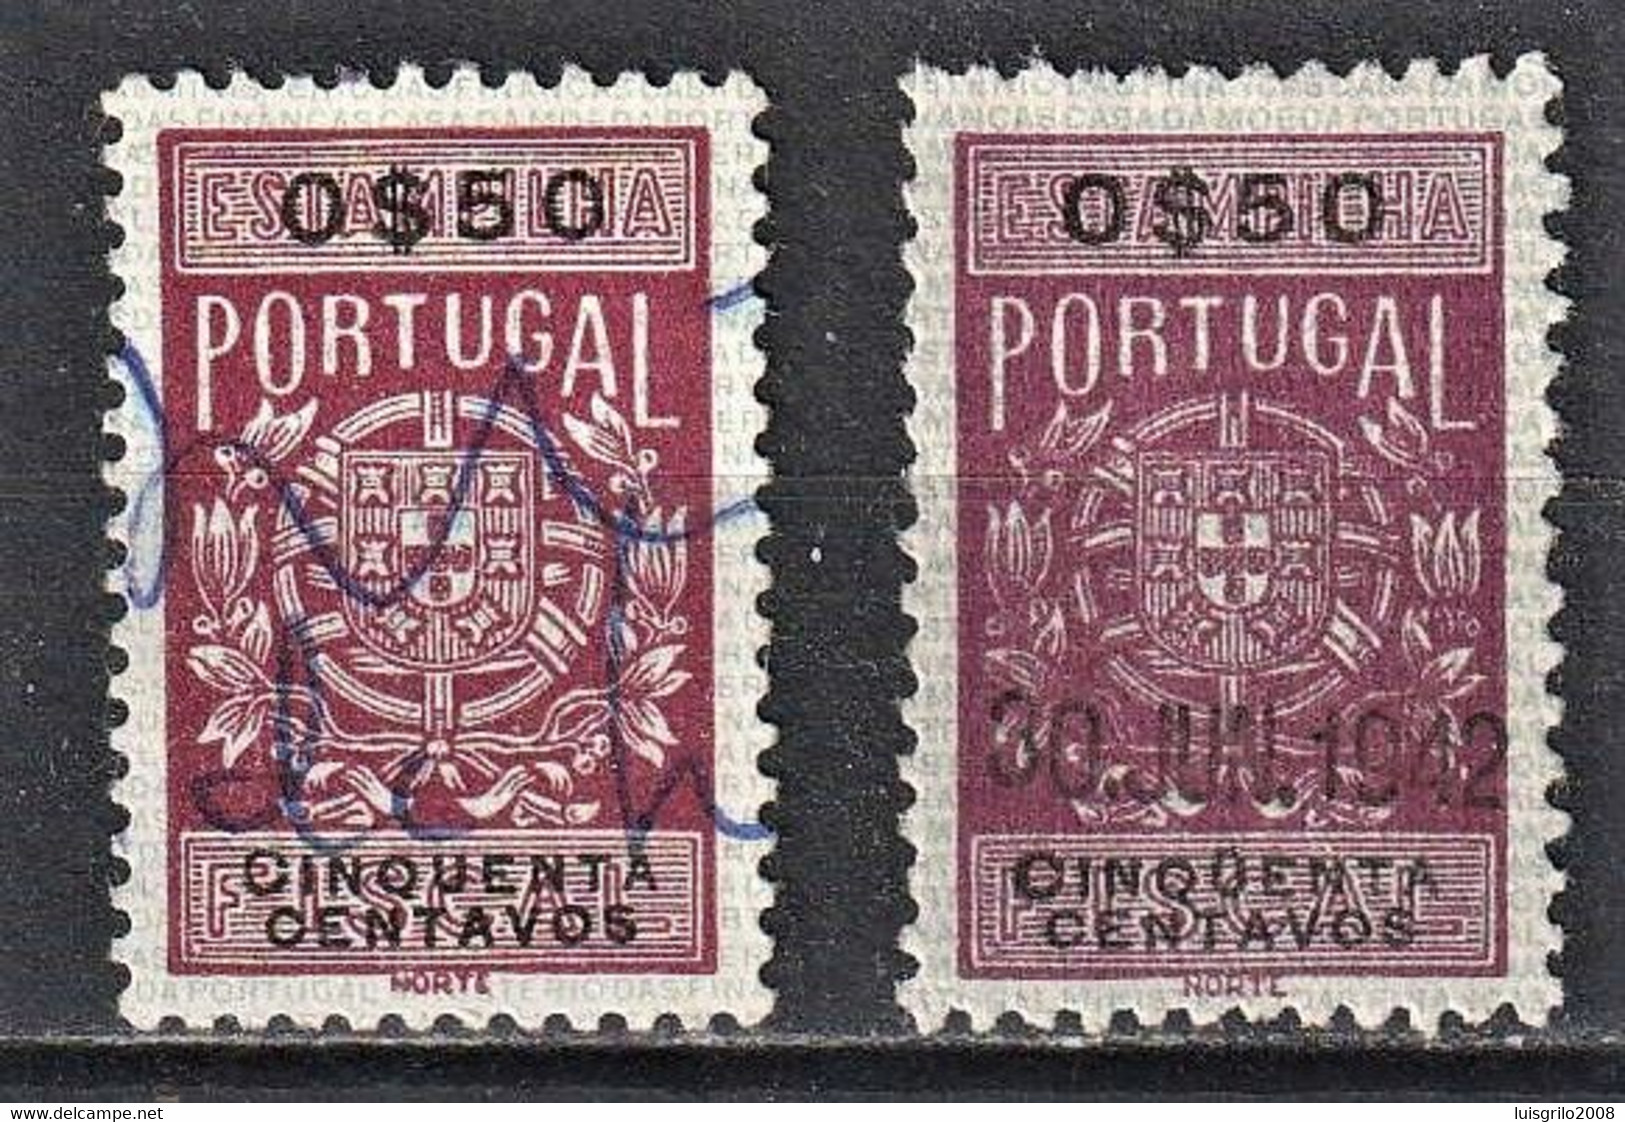 Fiscal/ Revenue, Portugal 1940 - Estampilha Fiscal -|- RARE STAMP - 0$50 Cinqüenta (Accents On The Letter U) - Gebruikt